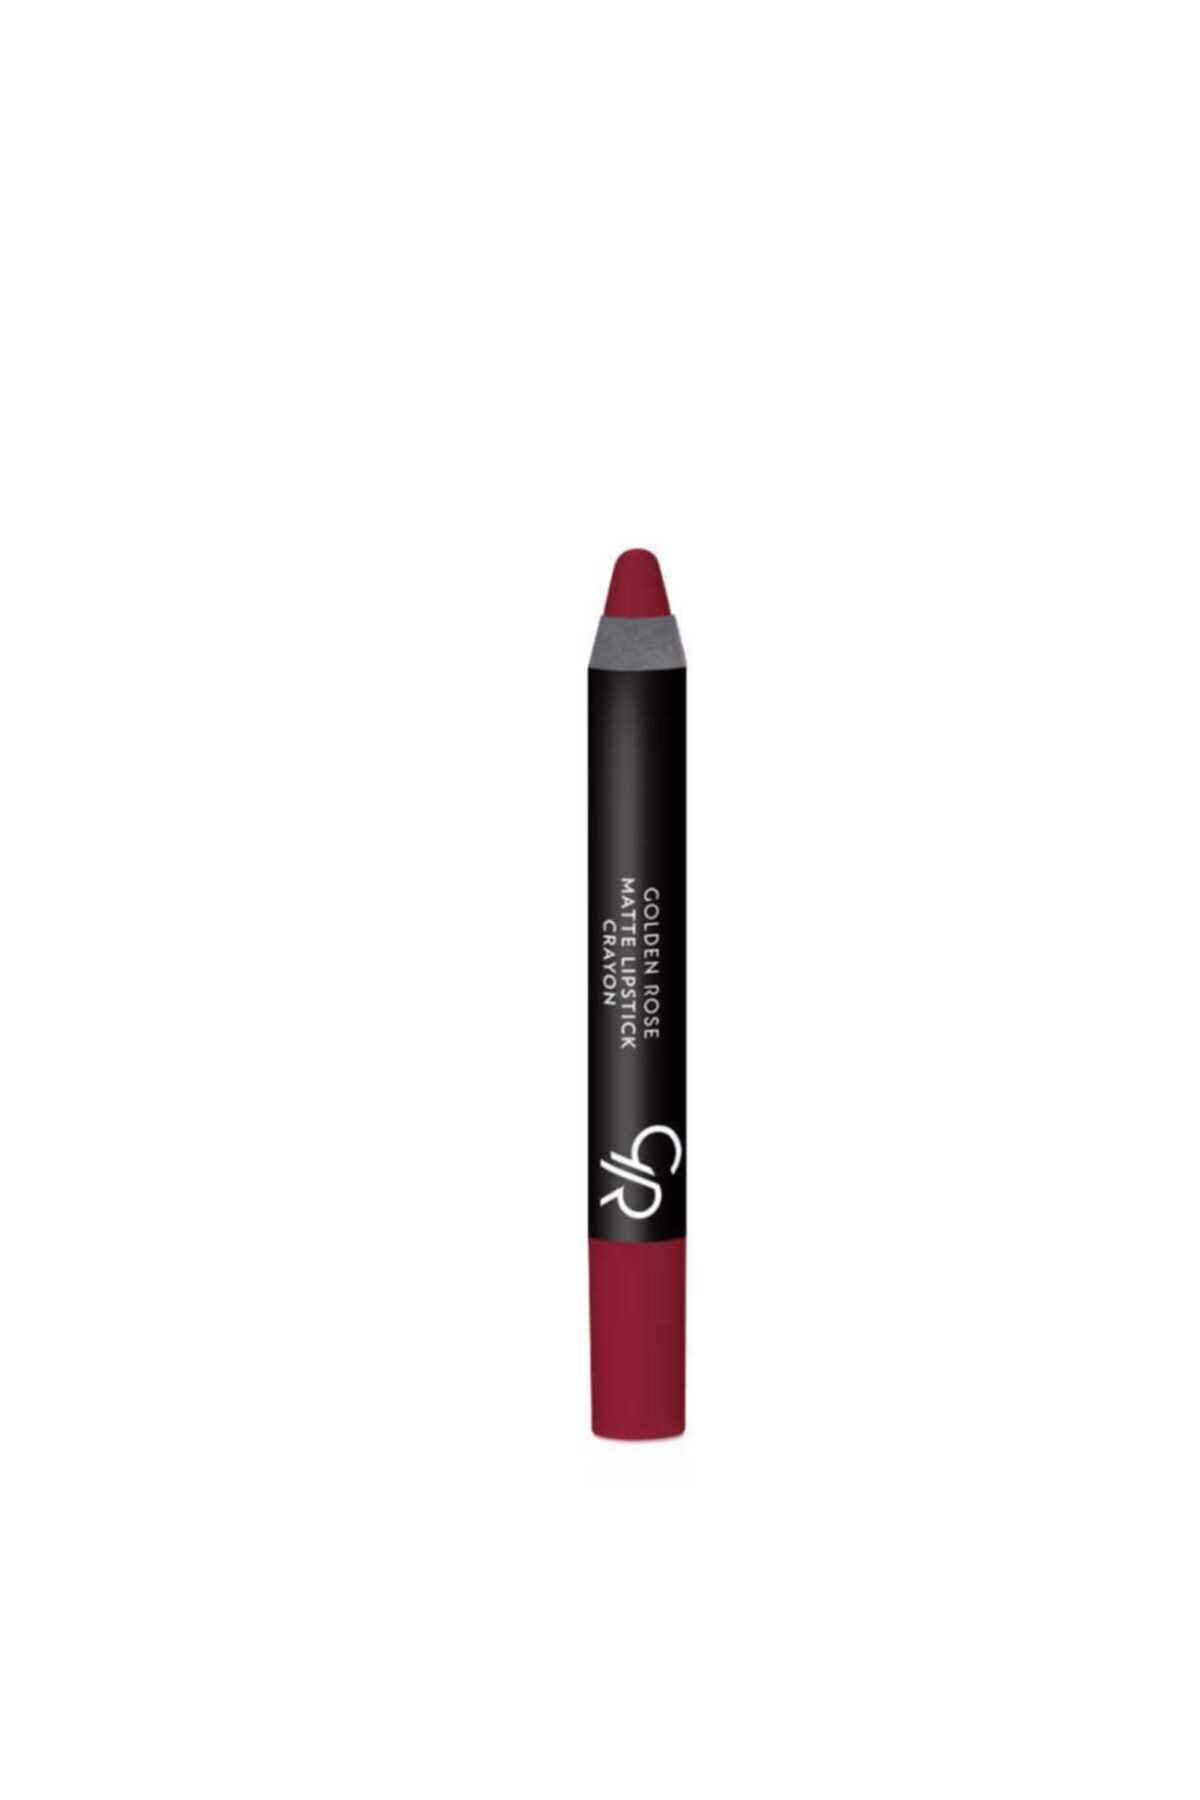 Golden Rose Matte Lipstick Crayon Ruj No: 20